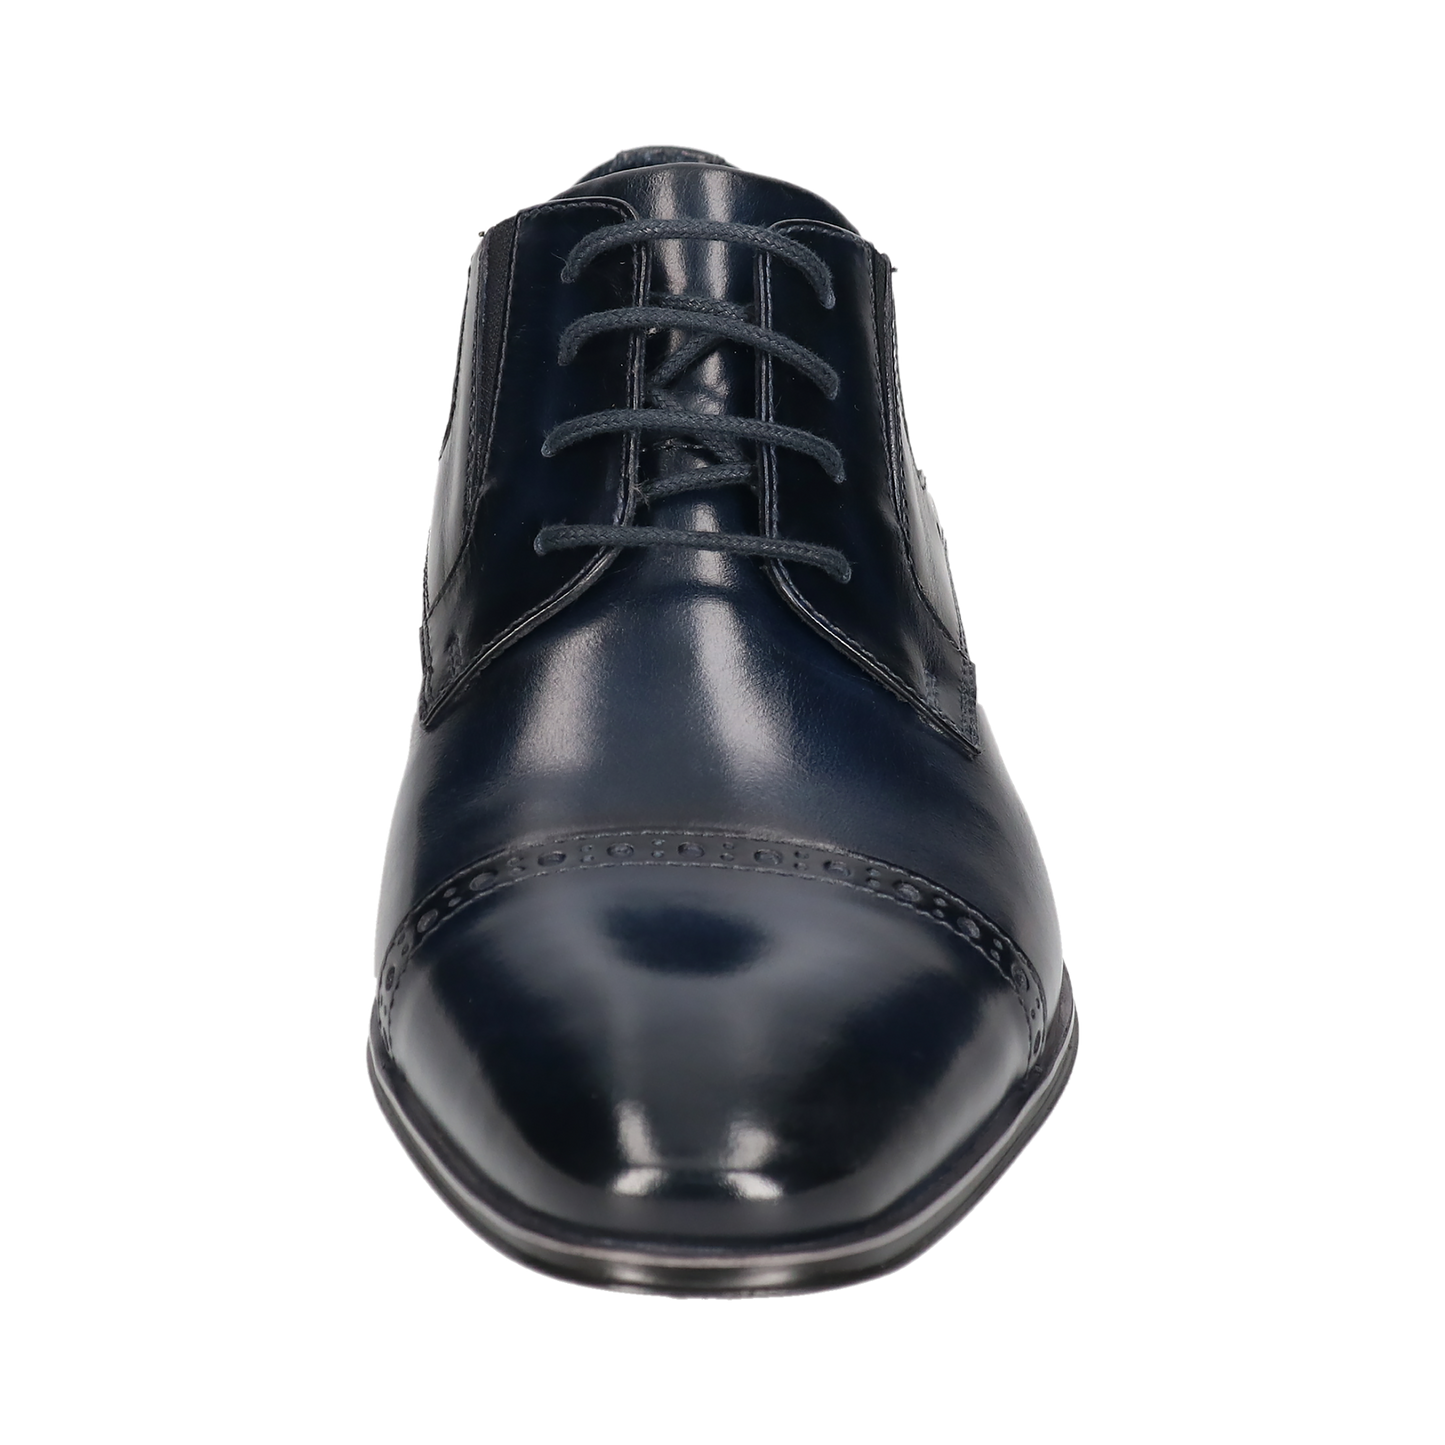 Bugatti Leather Business Shoe - Dark Blue